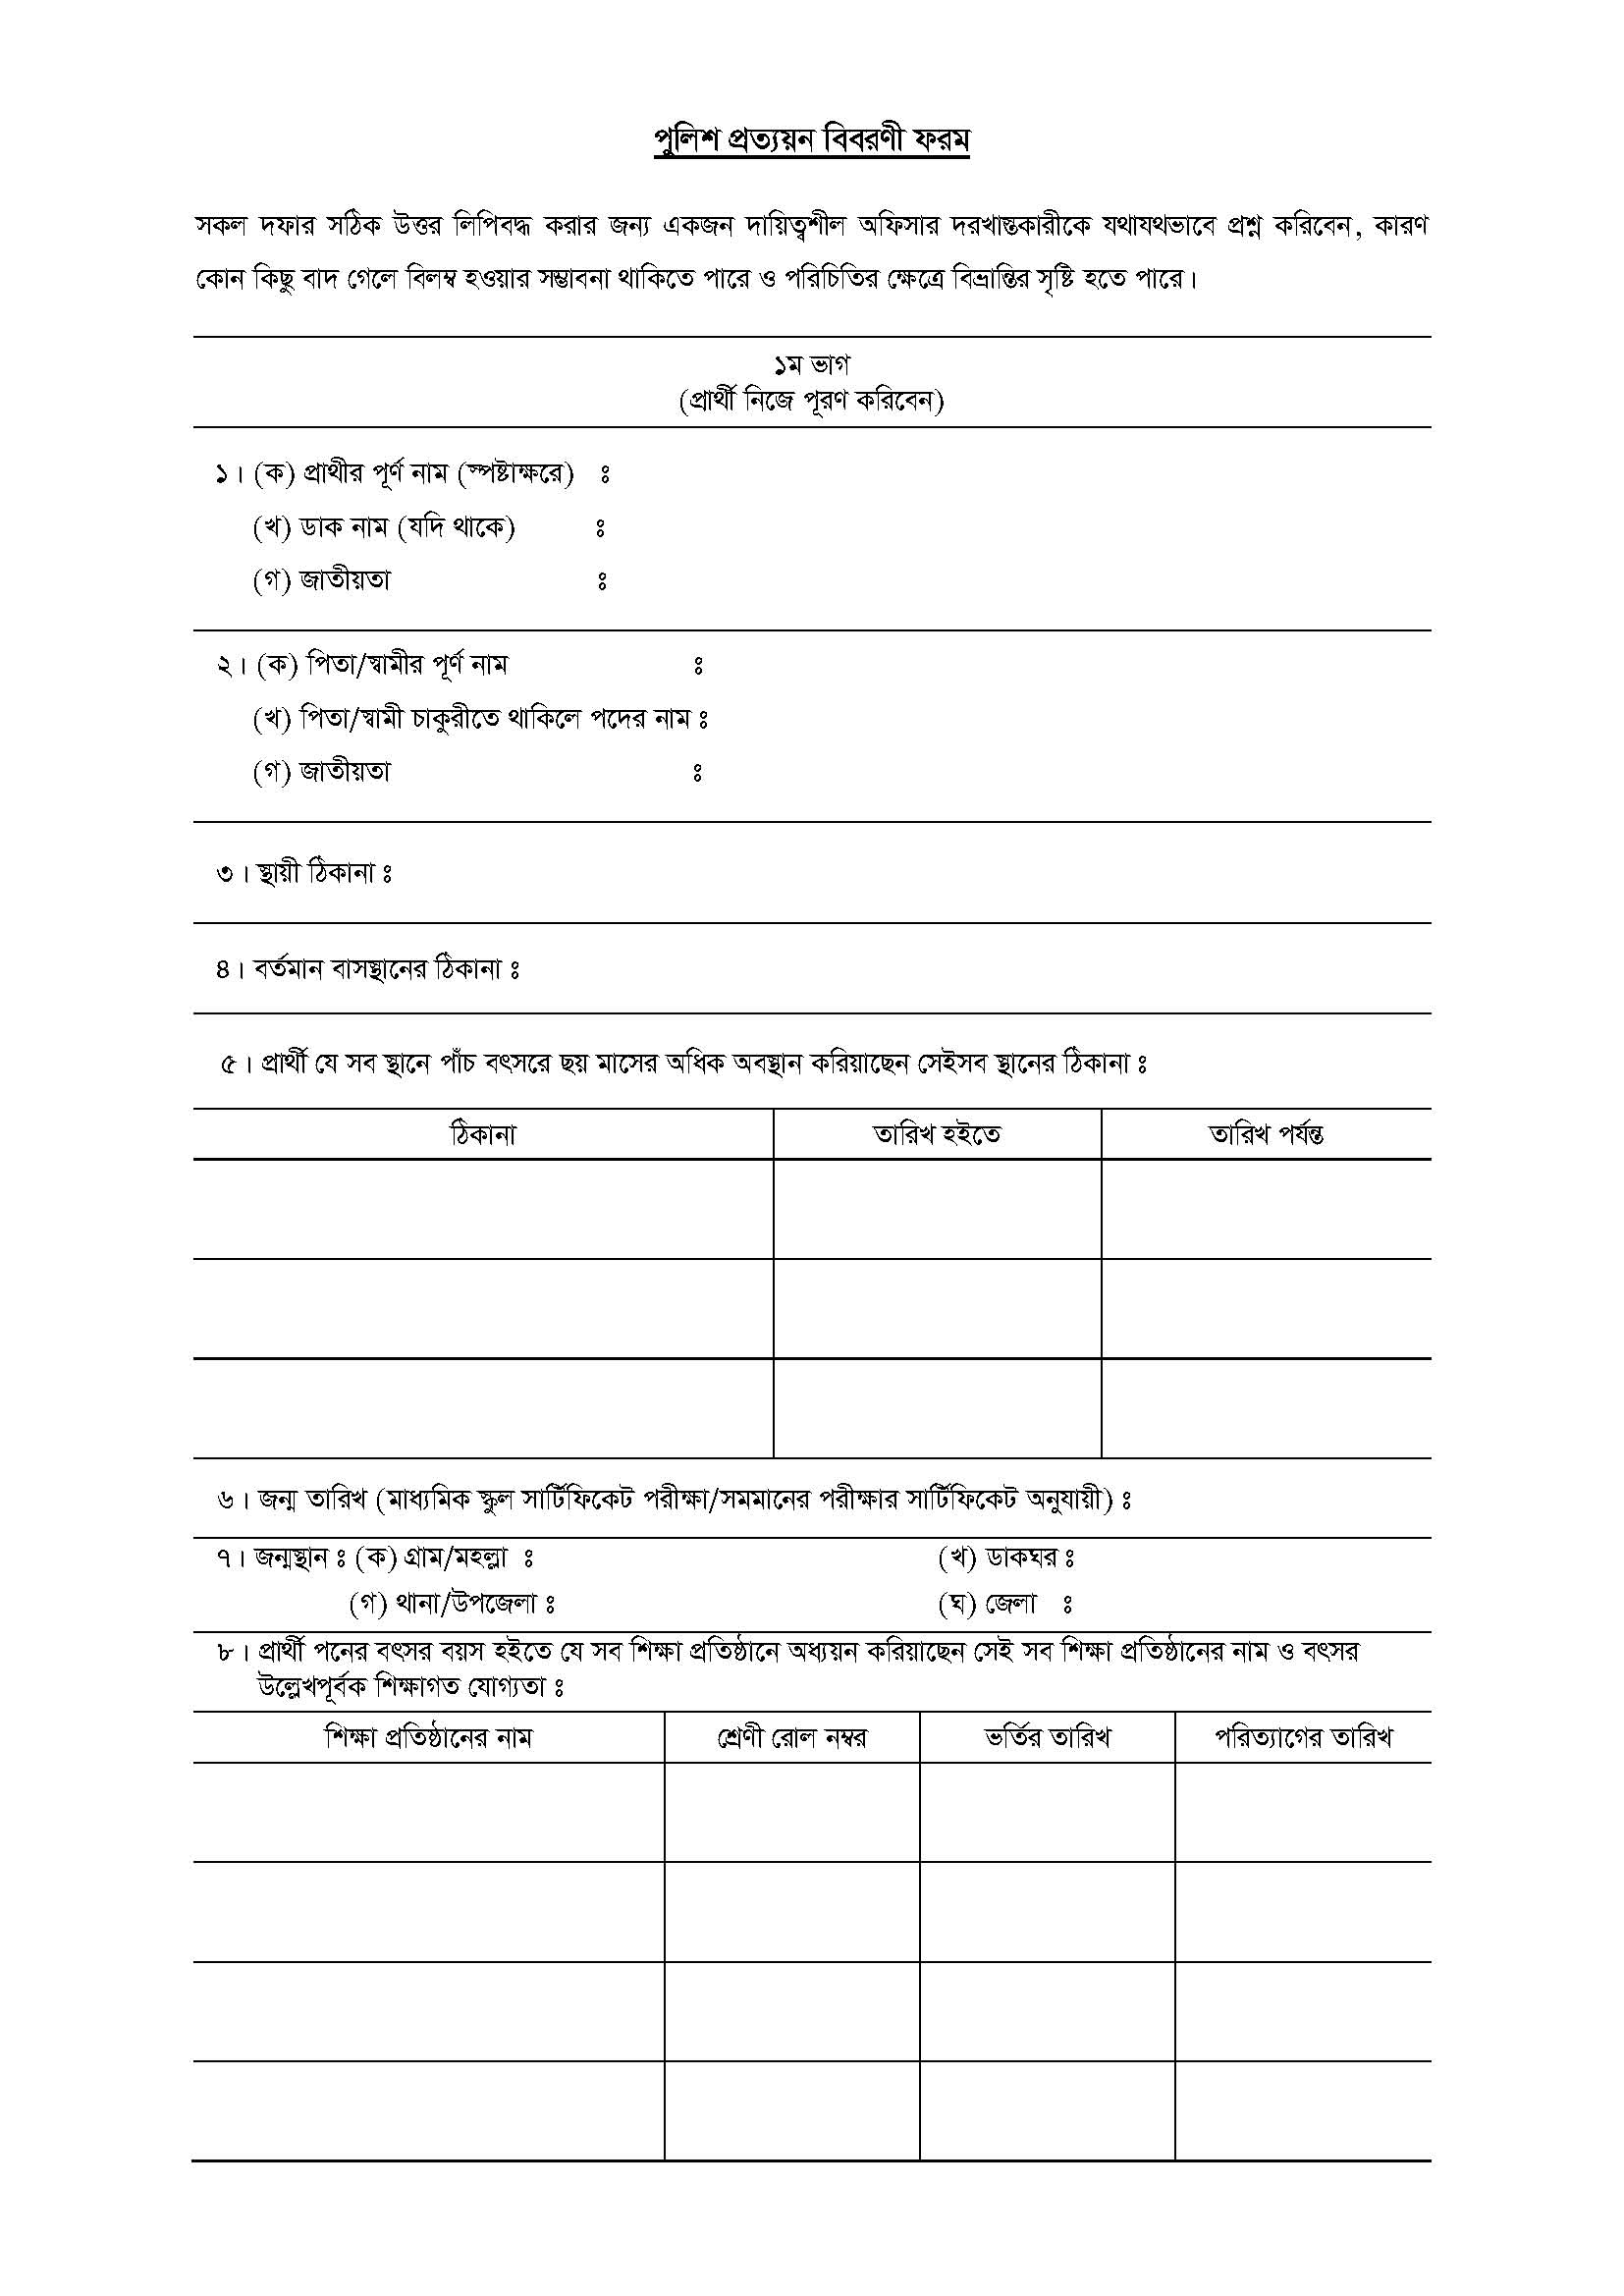 Police Verification Form pdf